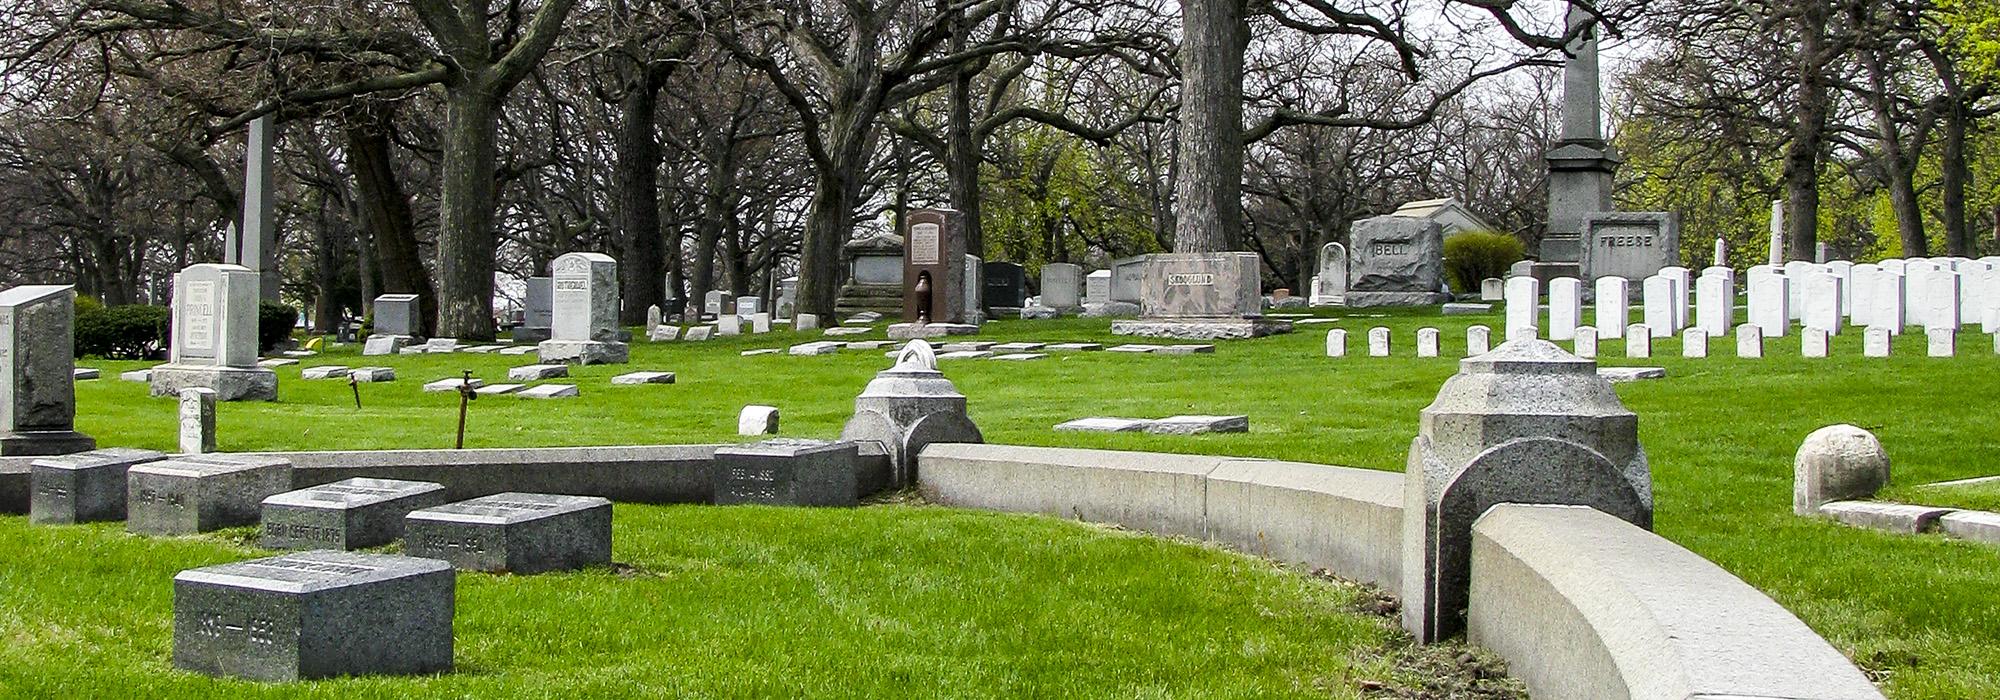 Rosehill Cemetery, Chicago, IL